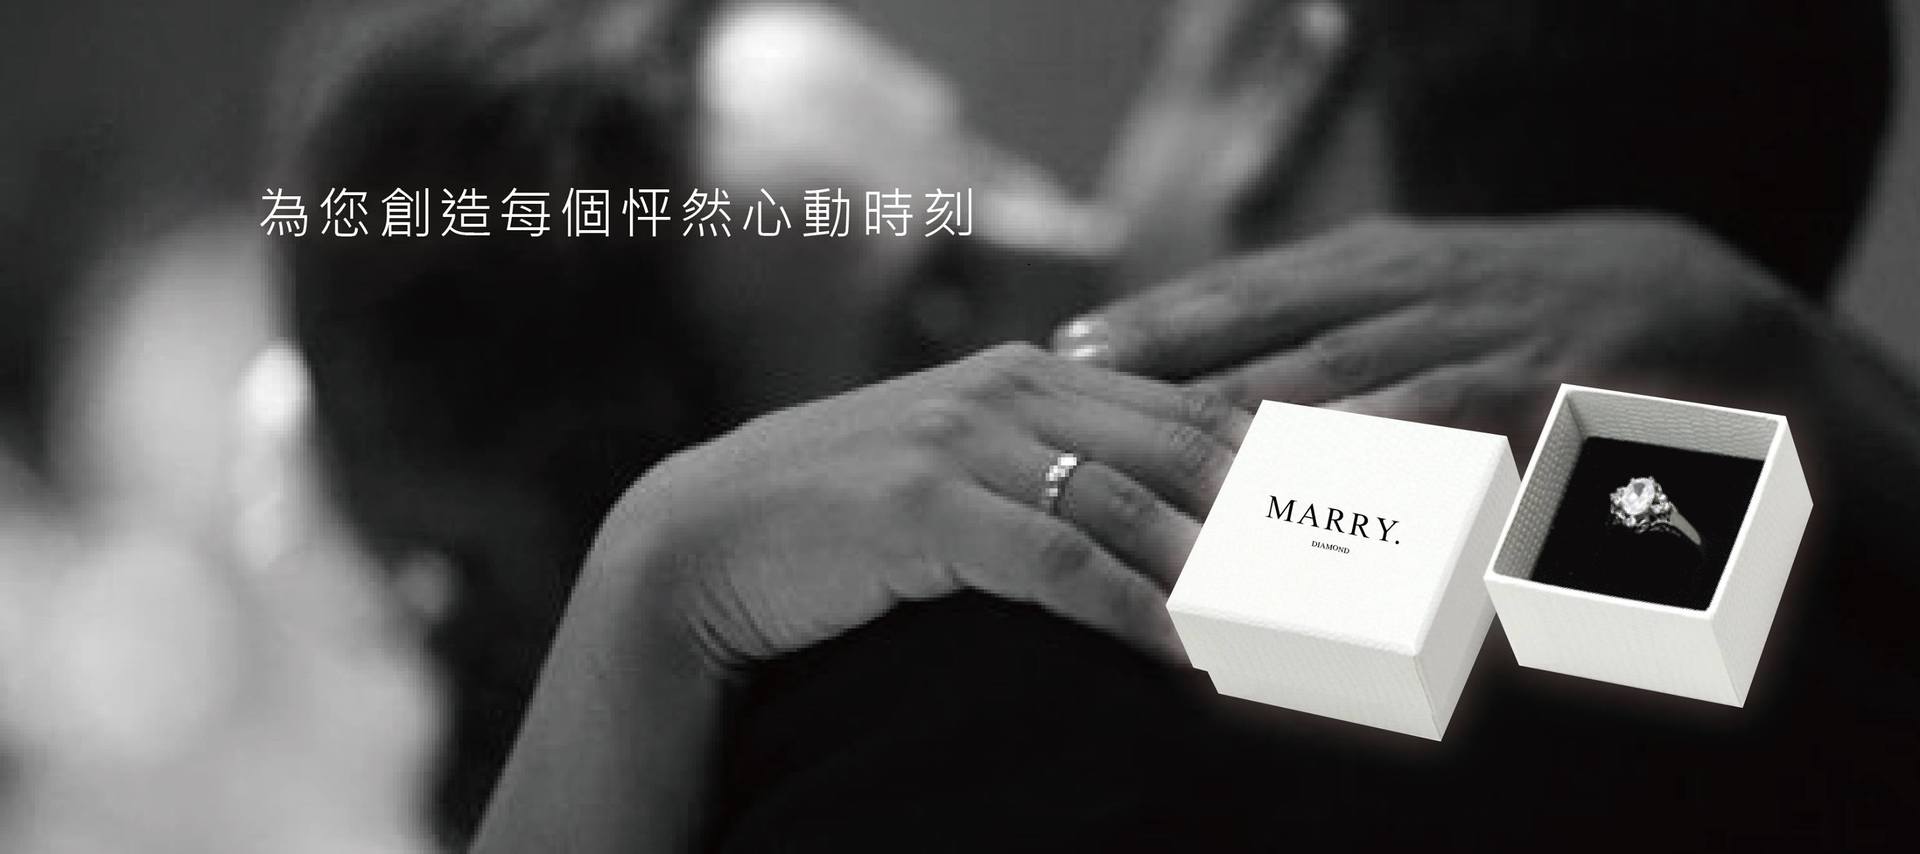 Marry diamond 亞洲首創時尚品味鑽戒